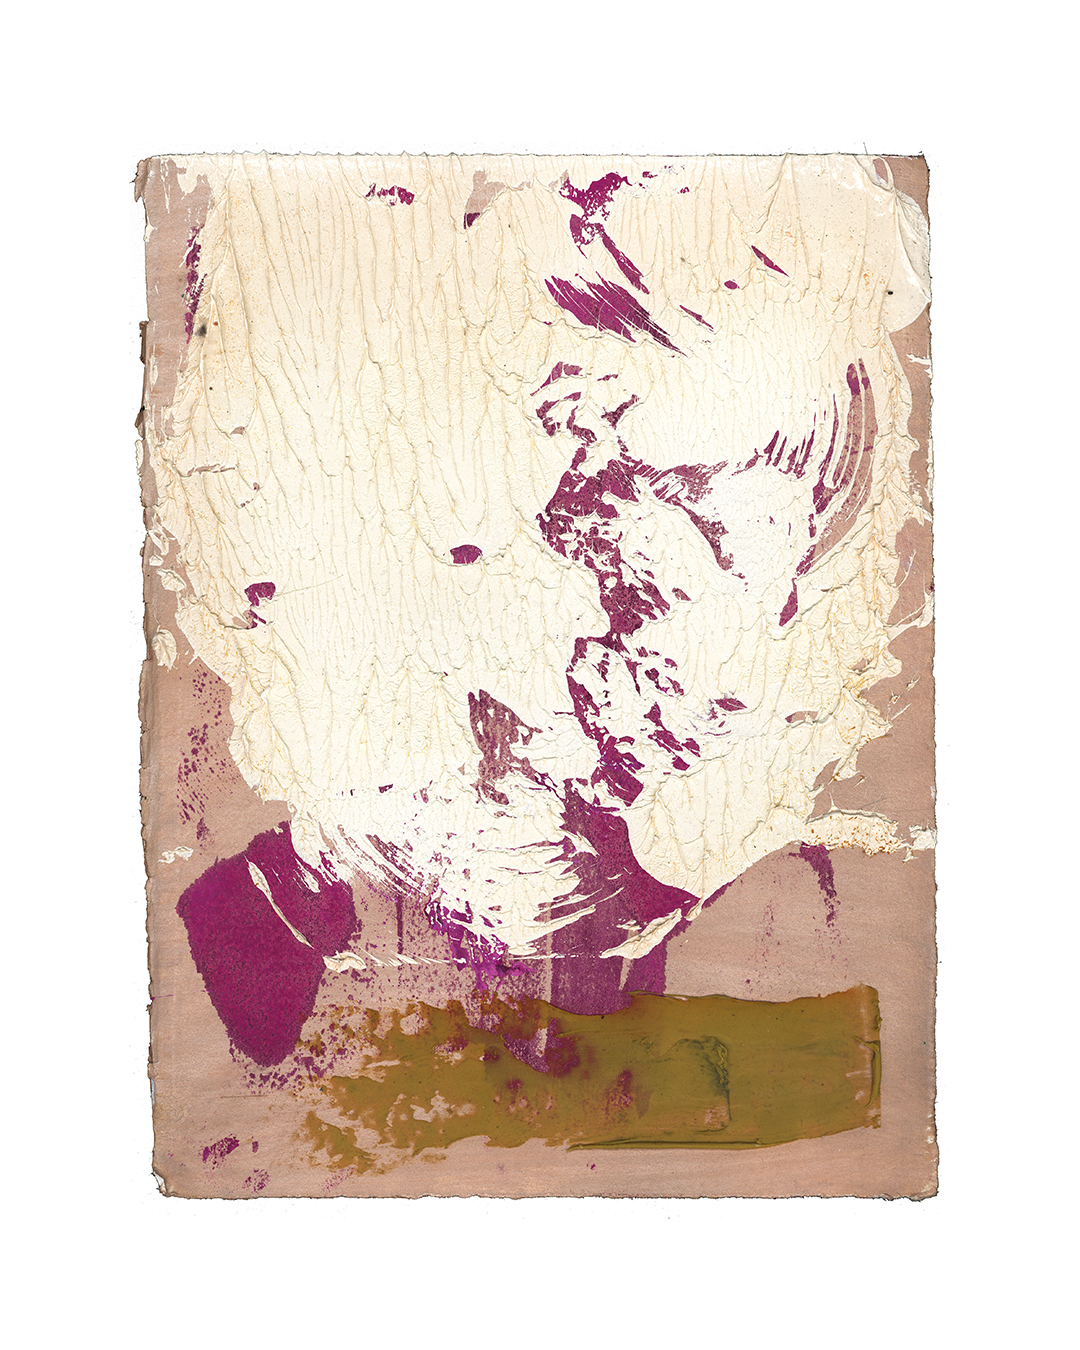 Piet Dieleman, zonder titel, 2020, schilderij, epoxyvuller, olieverf, acrylverf, pigment op papier, 380 x 285 mm, €930